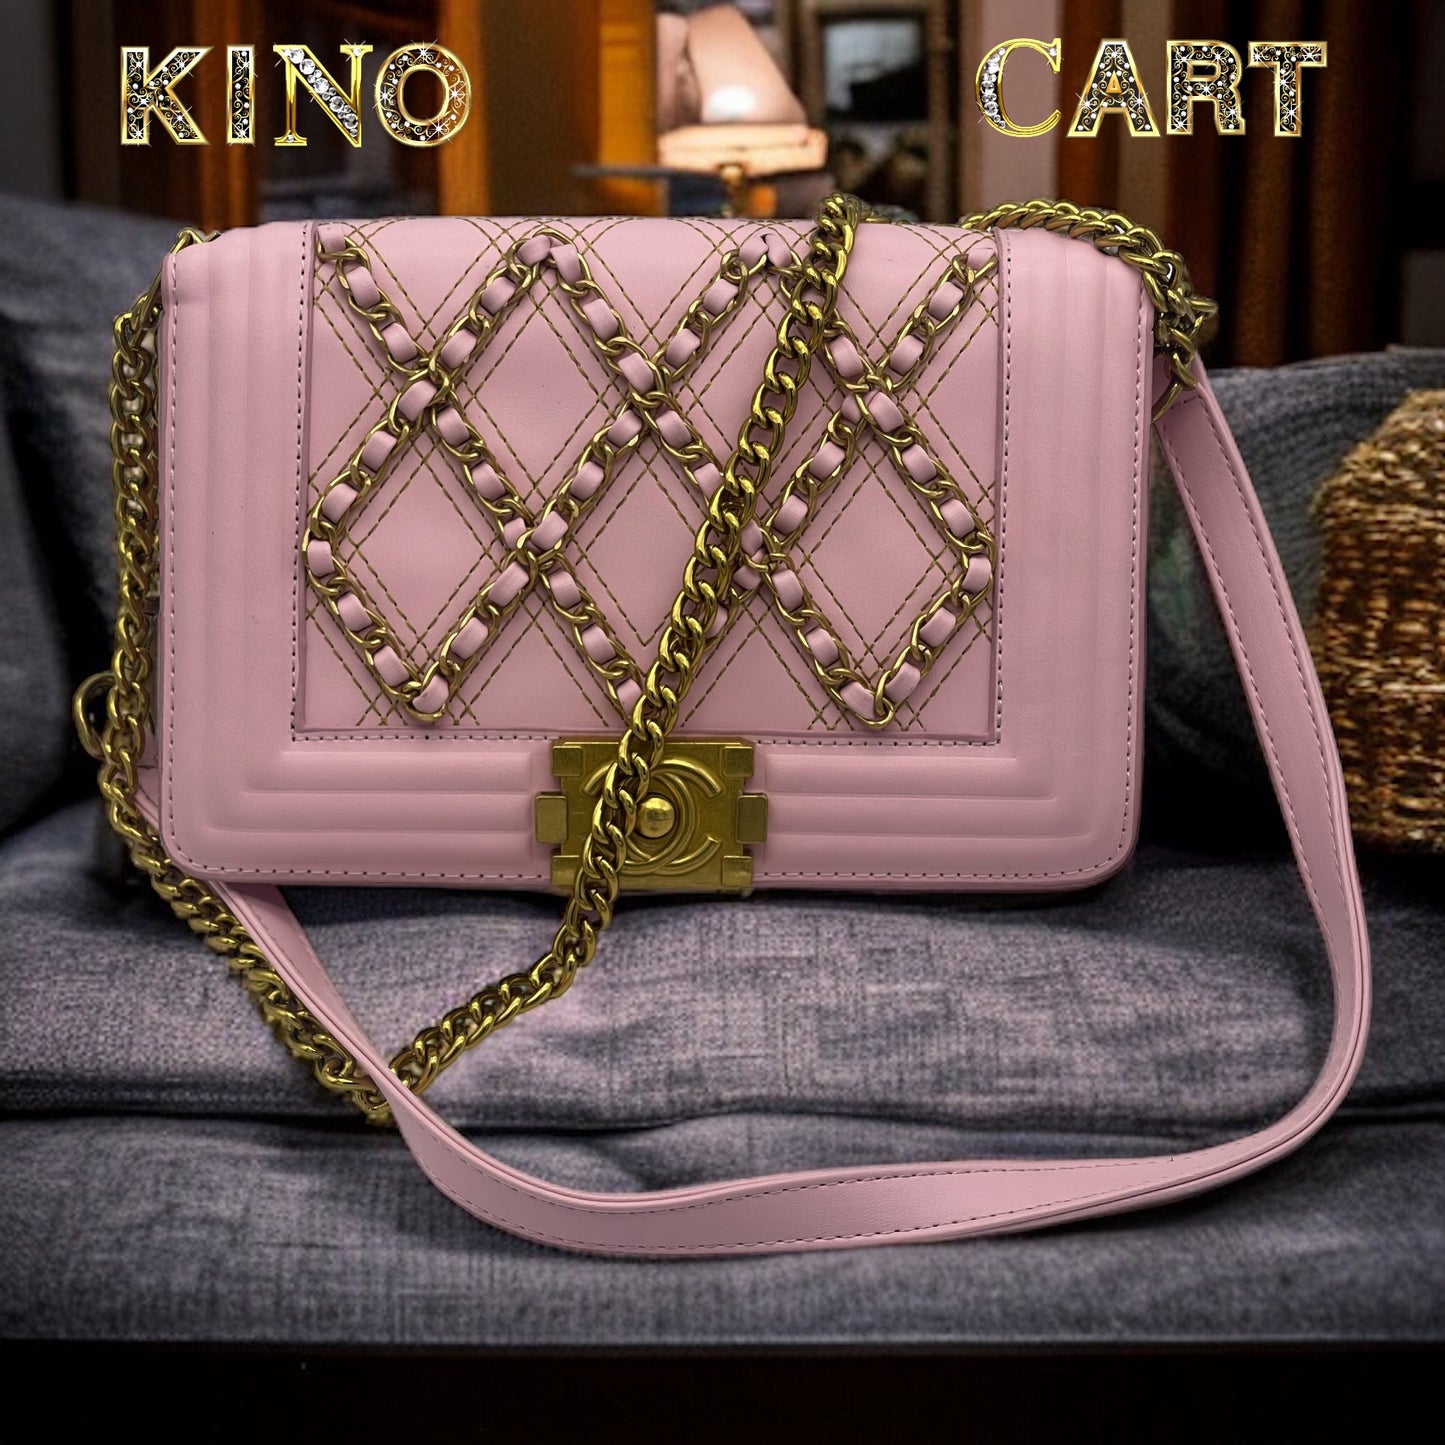 Stylish Pink Handbag with Gold Chain